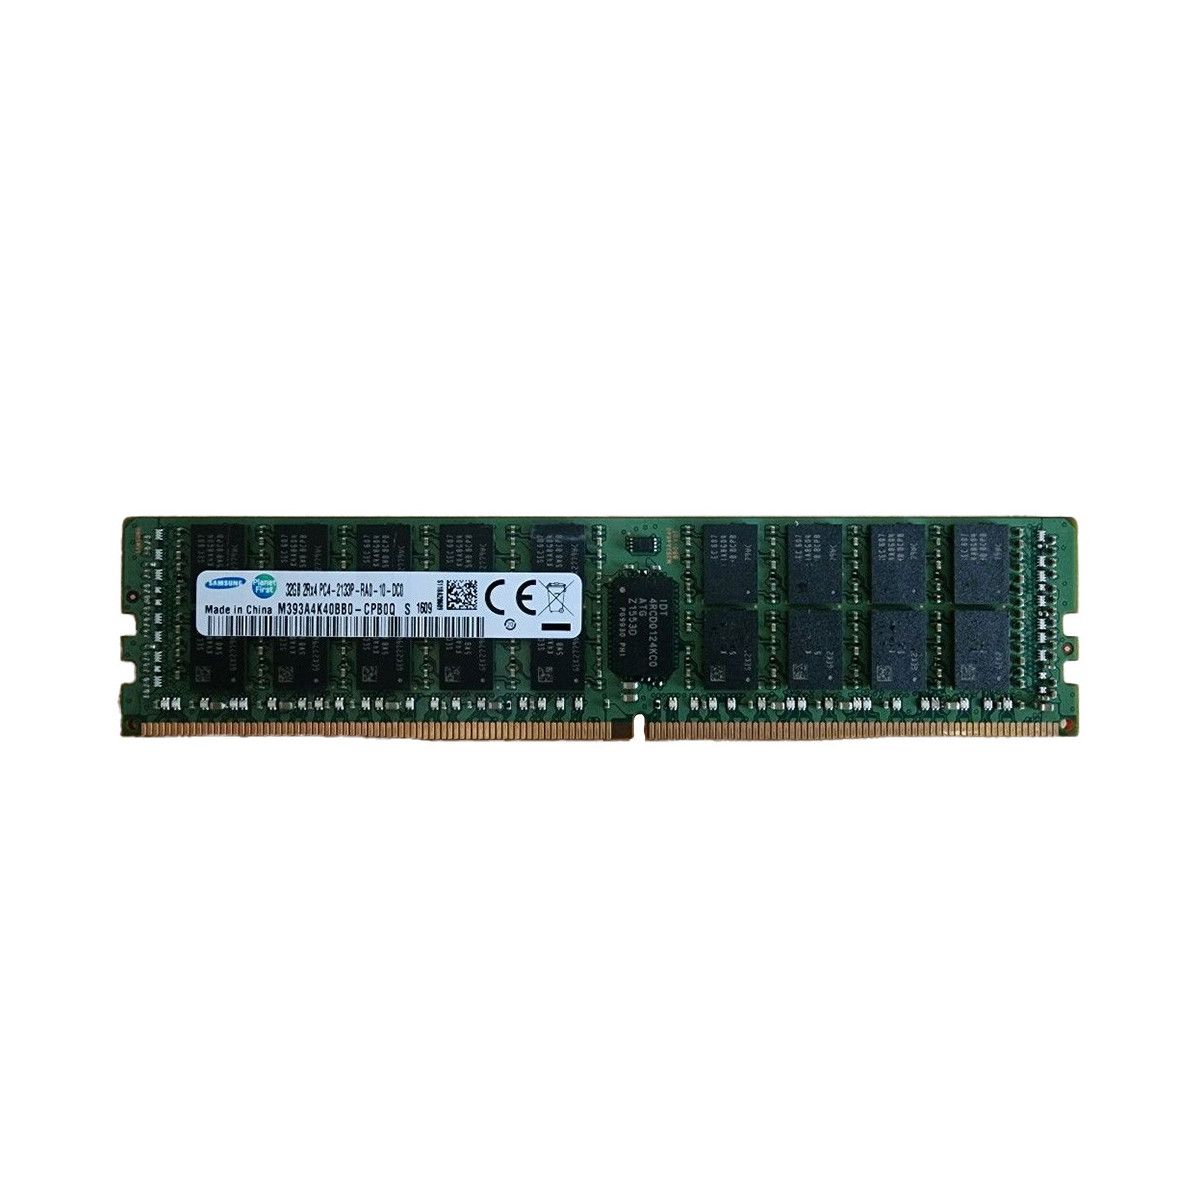 728629-B21-MS - Memstar 1x 32GB DDR4-2133 RDIMM PC4-17000P-R - Mem-Star Kompatybilna pamięć OEM 1 - Memstar 